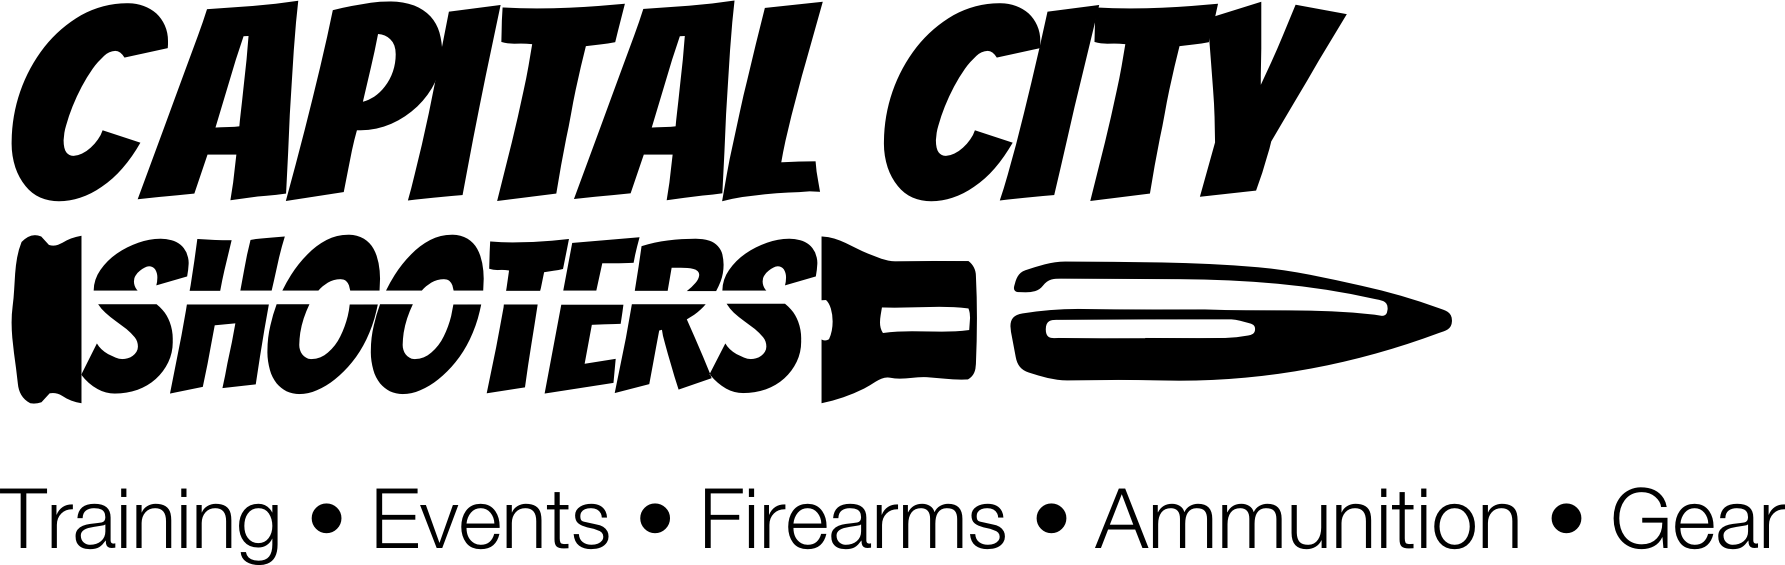 Capital City Shooters